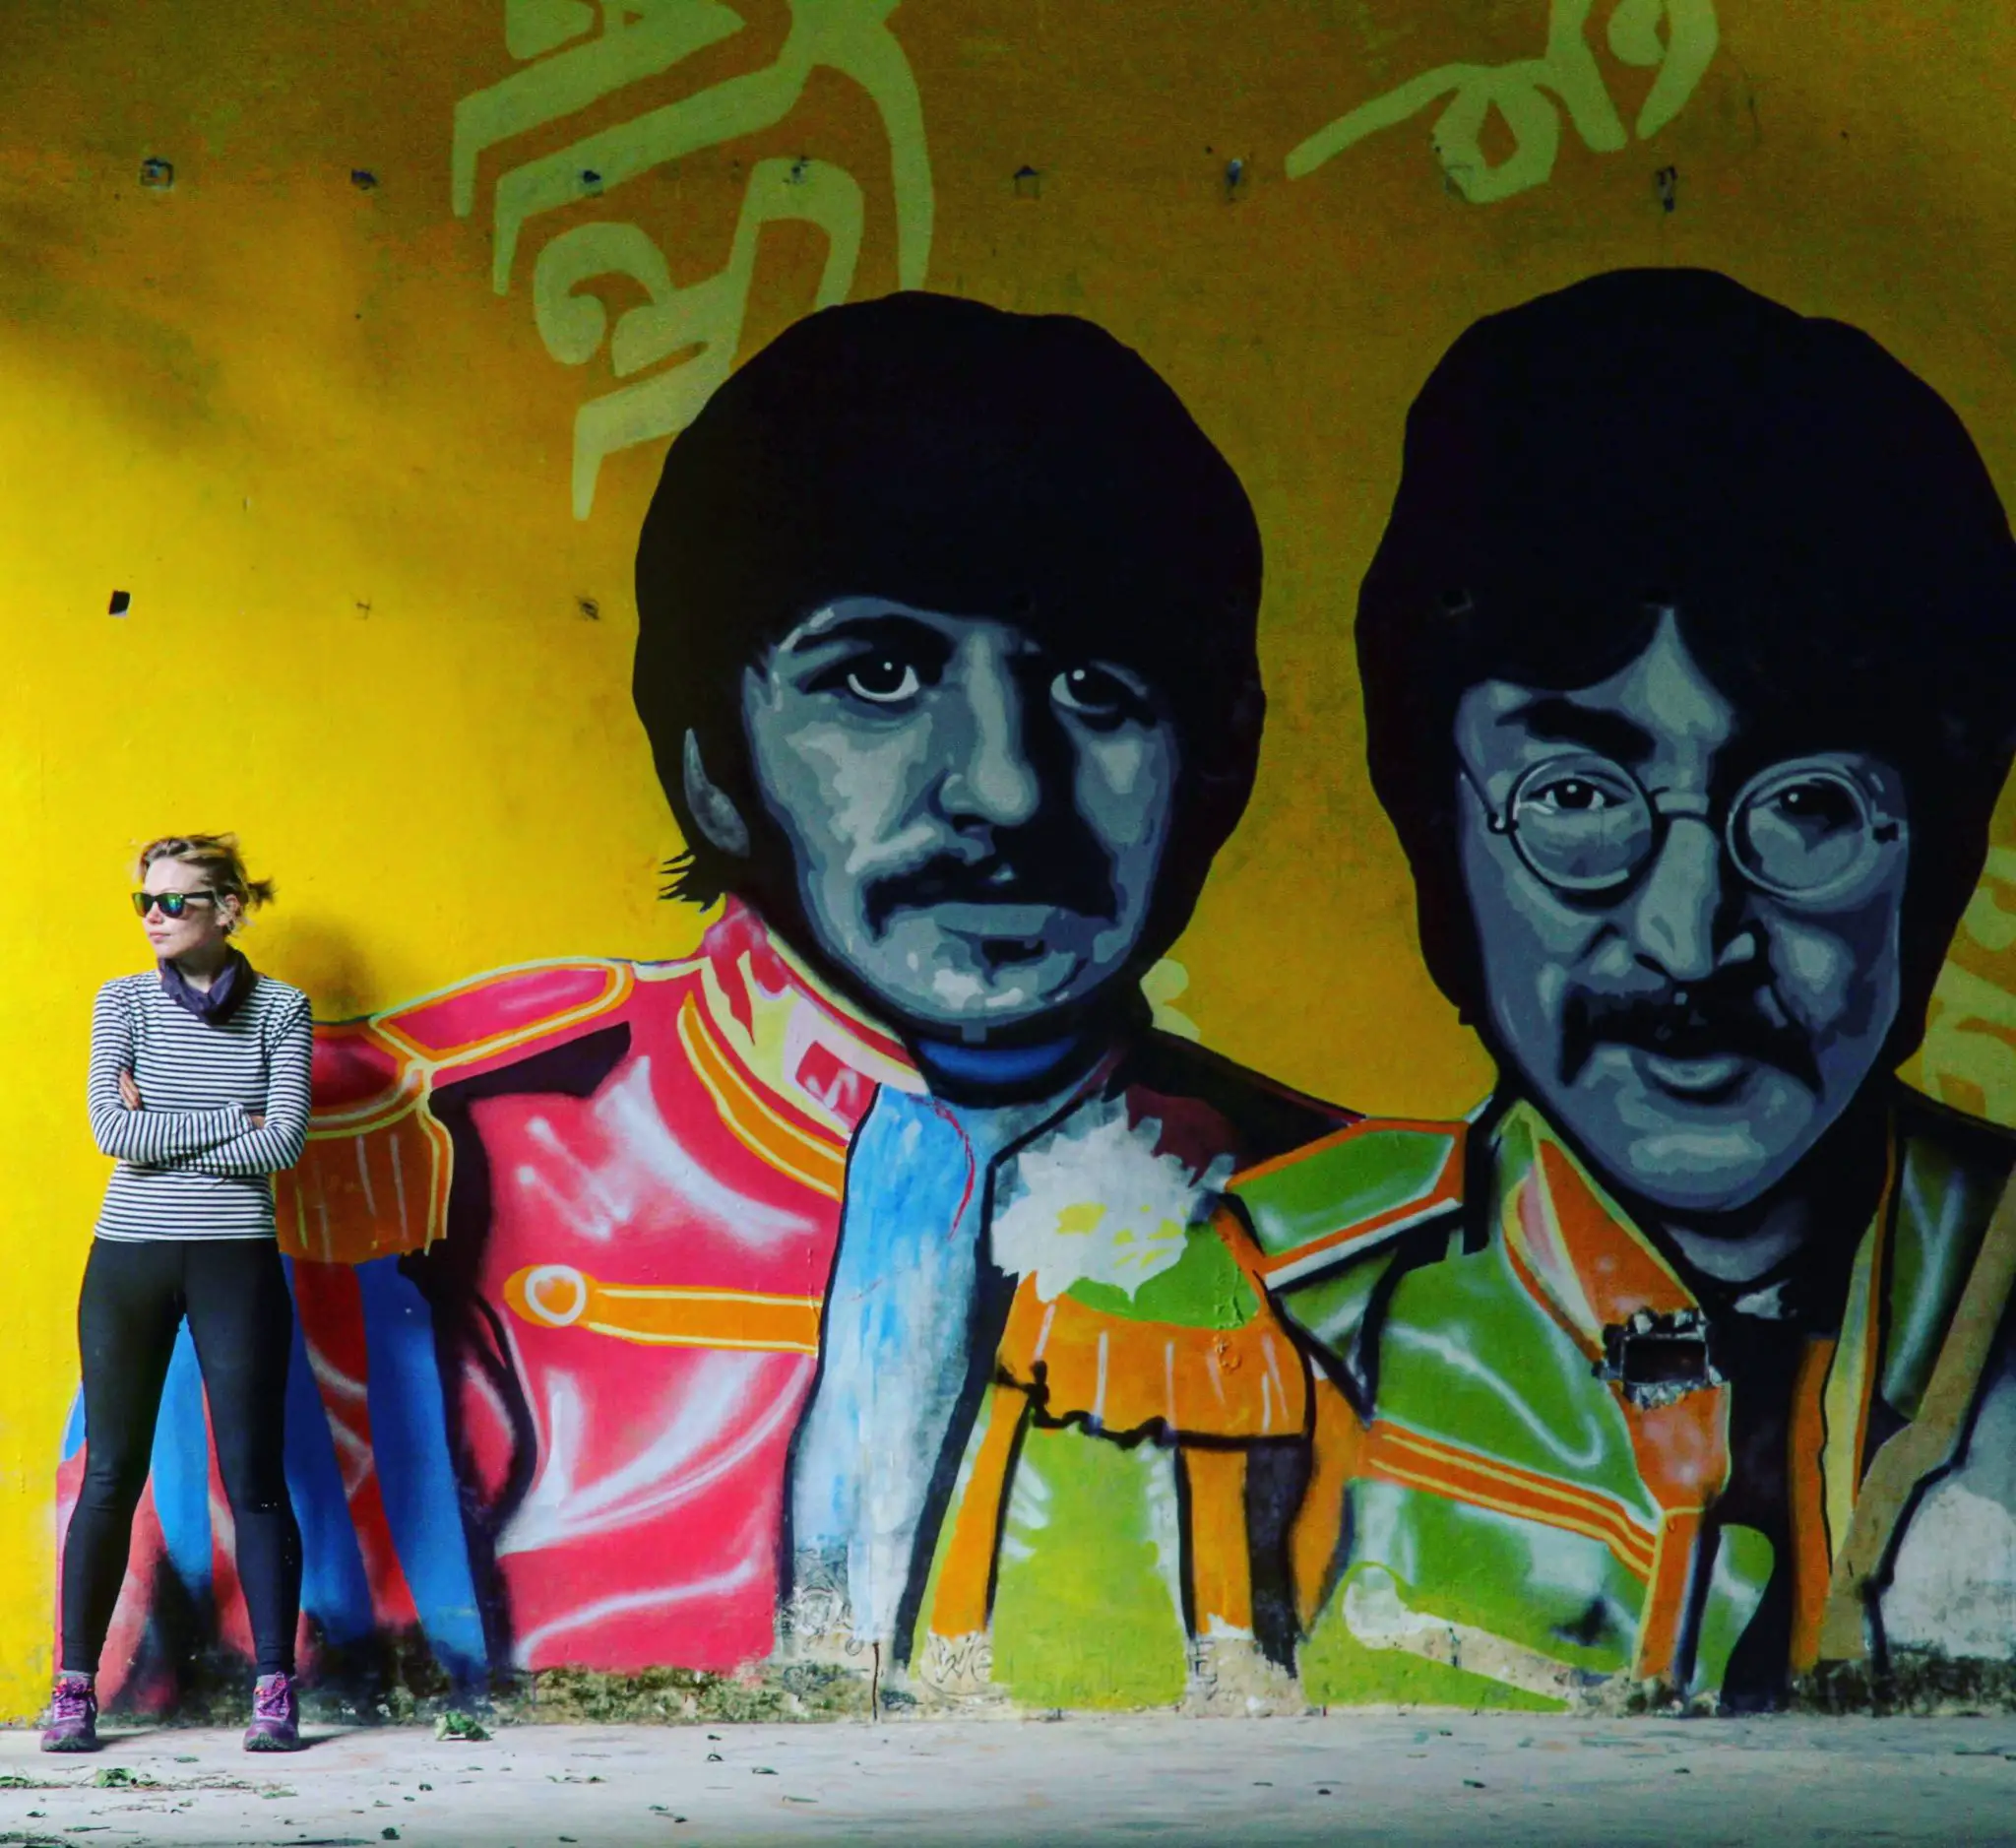 George and John graffiti, The Beatles Ashram, Rishikesh